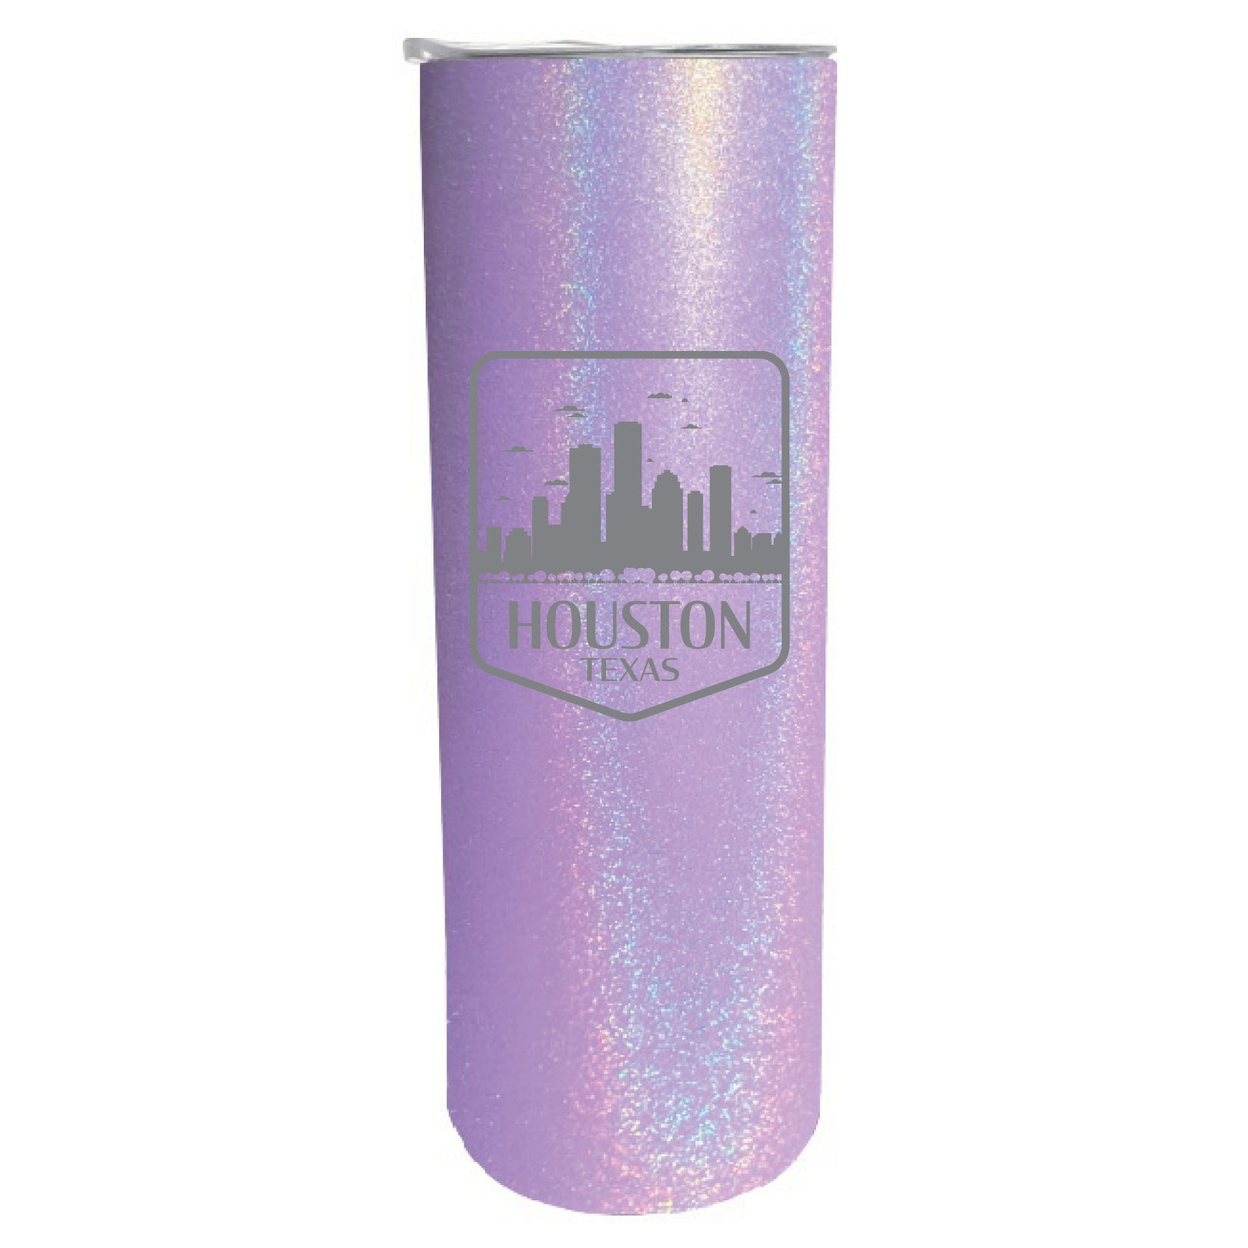 Houston Texas Souvenir 20 Oz Engraved Insulated Stainless Steel Skinny Tumbler - Gray Glitter,,2-Pack